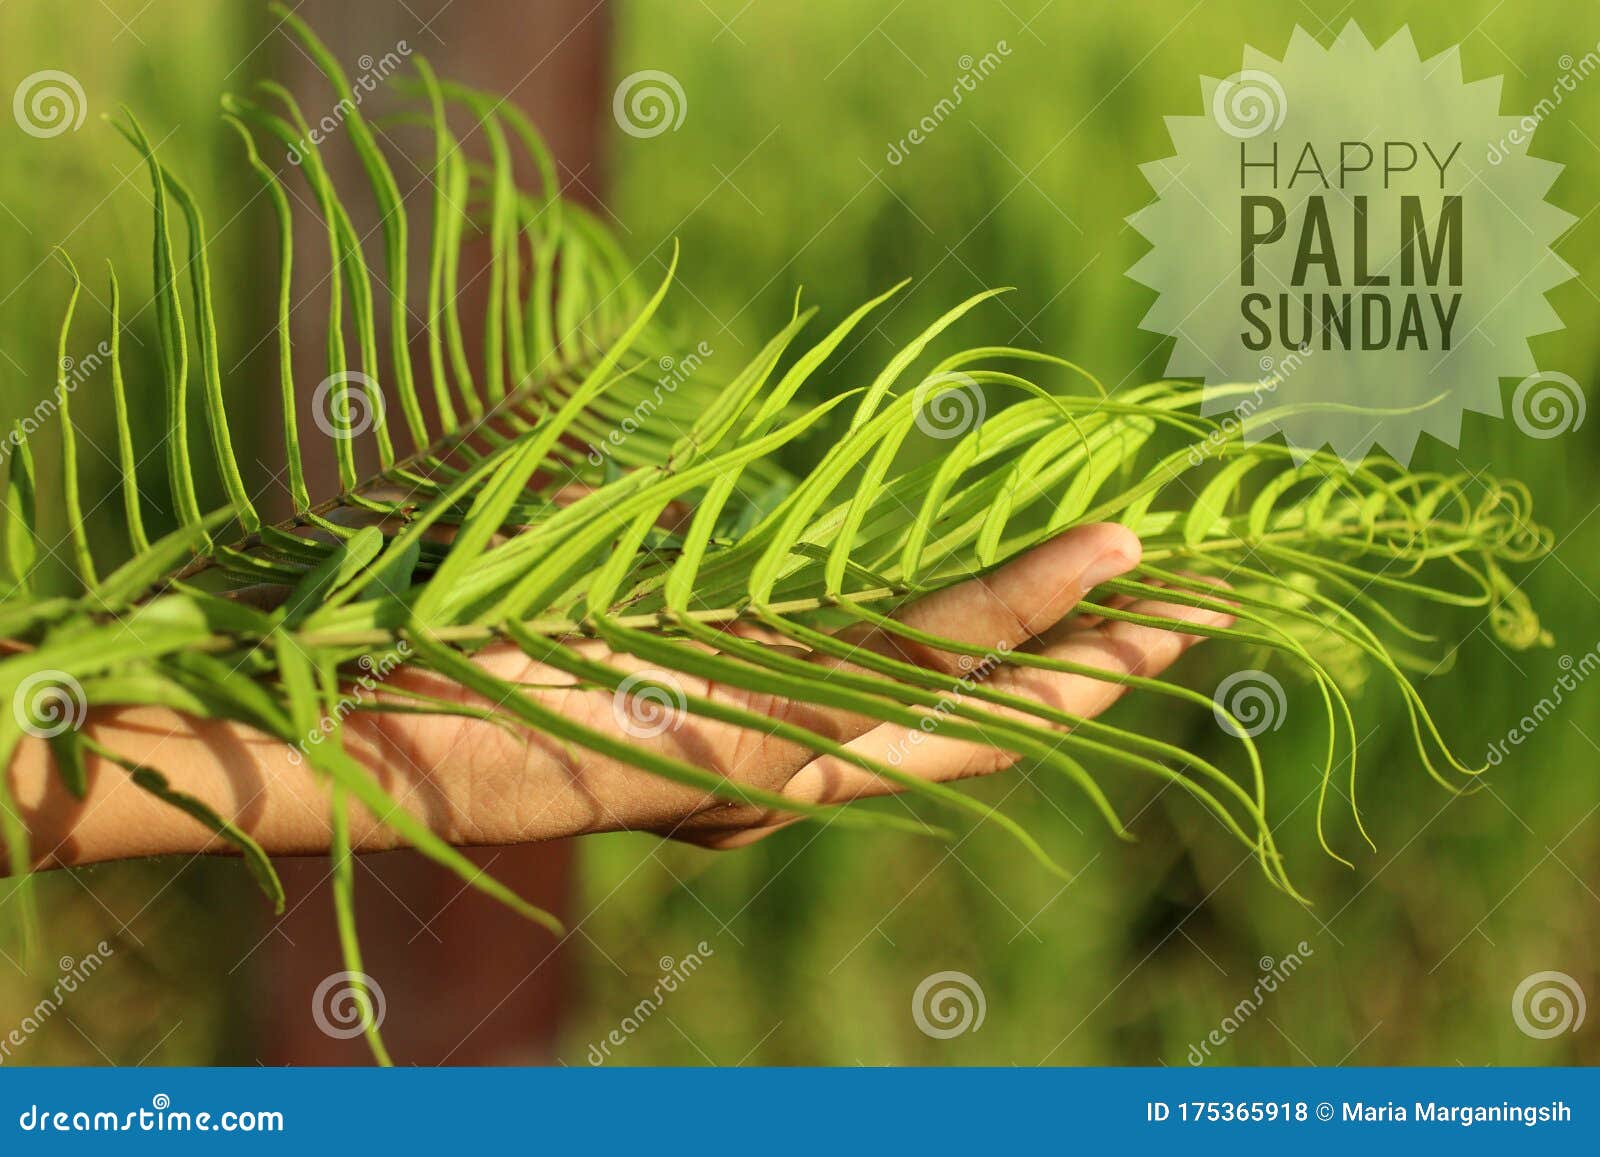 Happy Palm Sunday Text Design on Fresh Green Bakcgorund and Fern ...